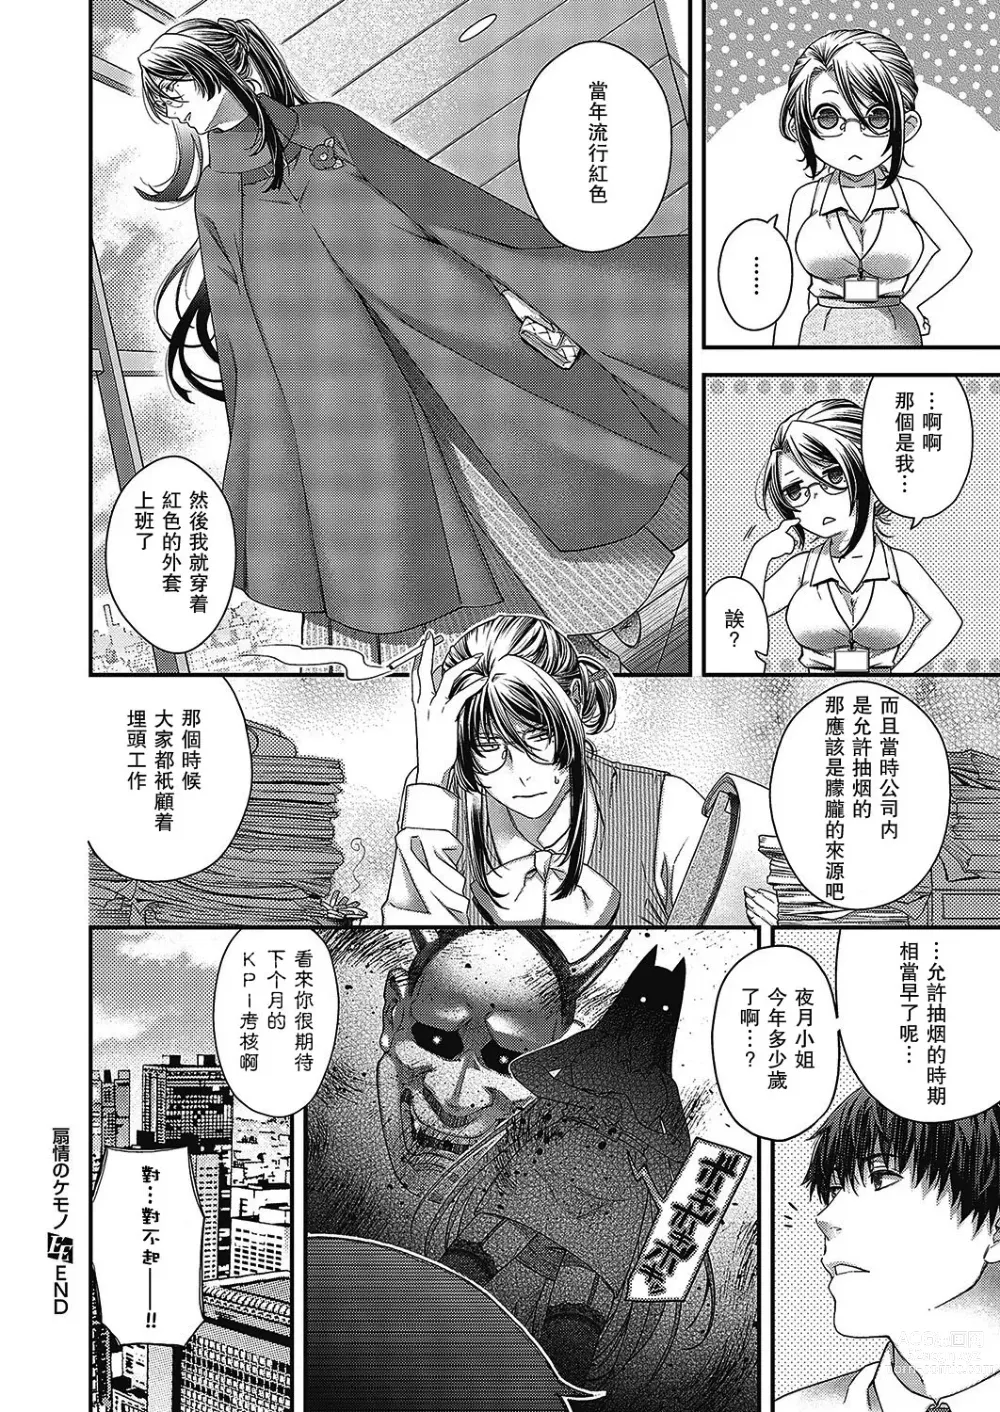 Page 41 of manga Senjou no Kemono